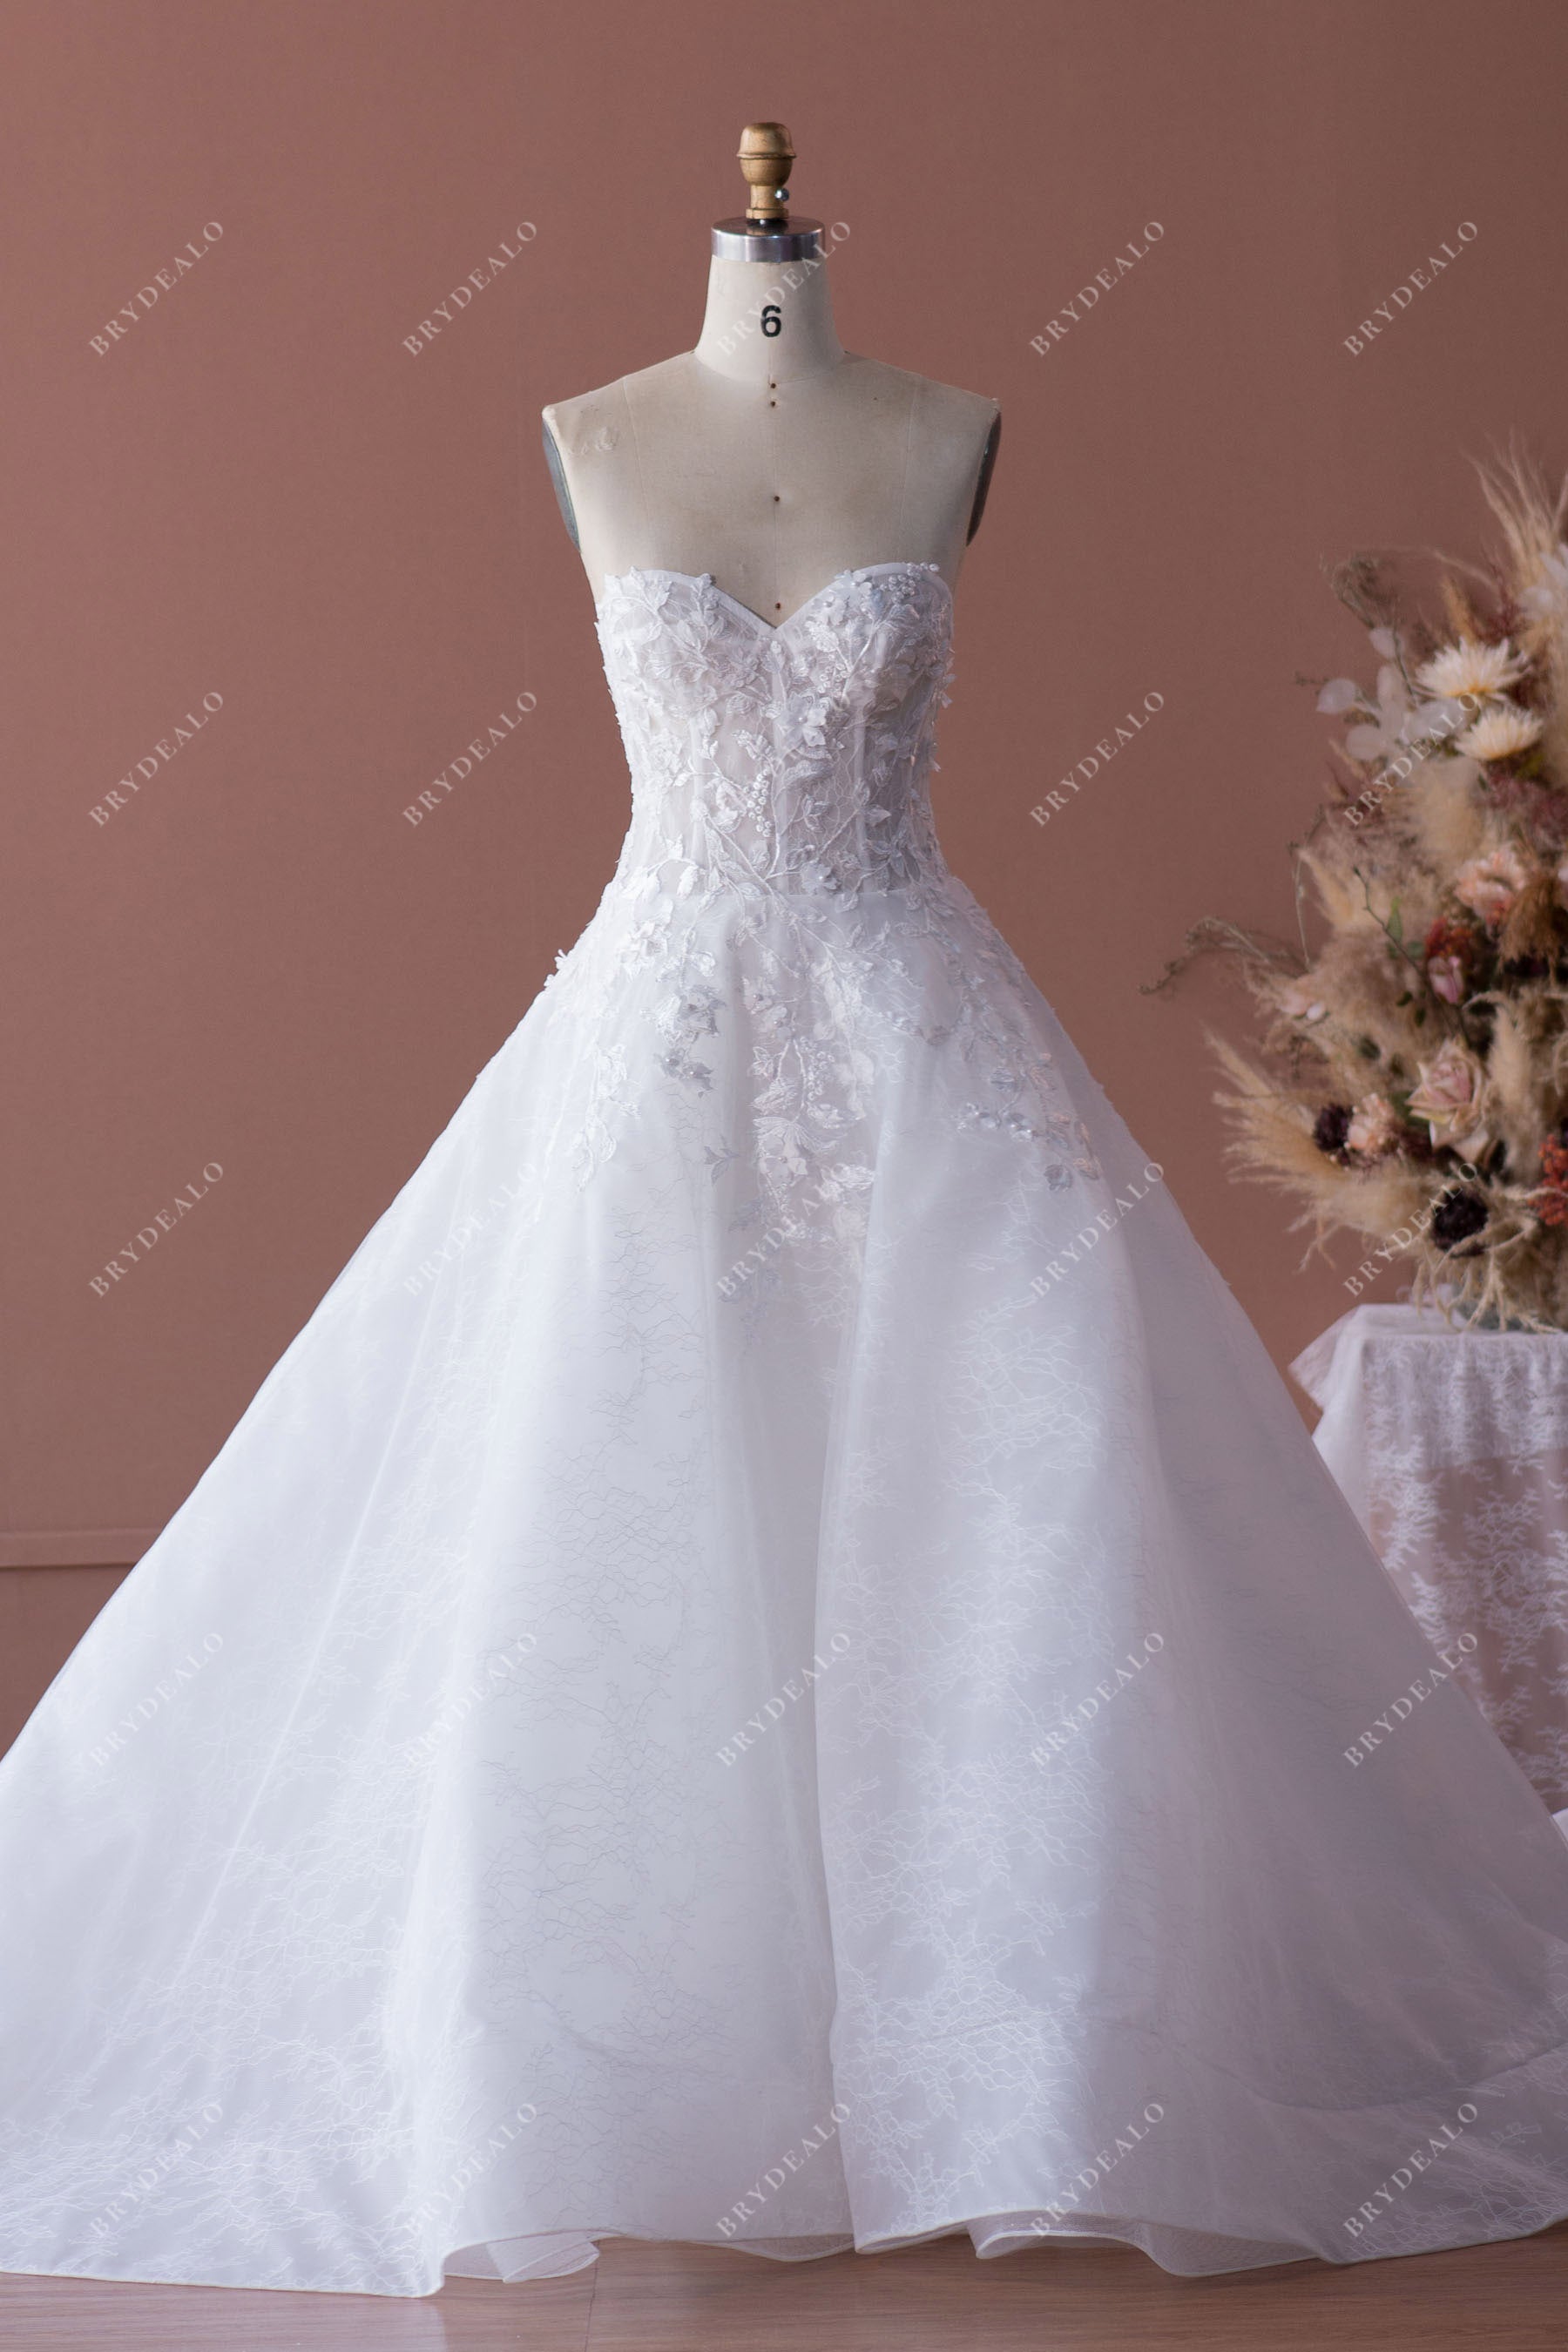 Strapless Sweetheart Corset Lace Long Ballgown Wedding Dress